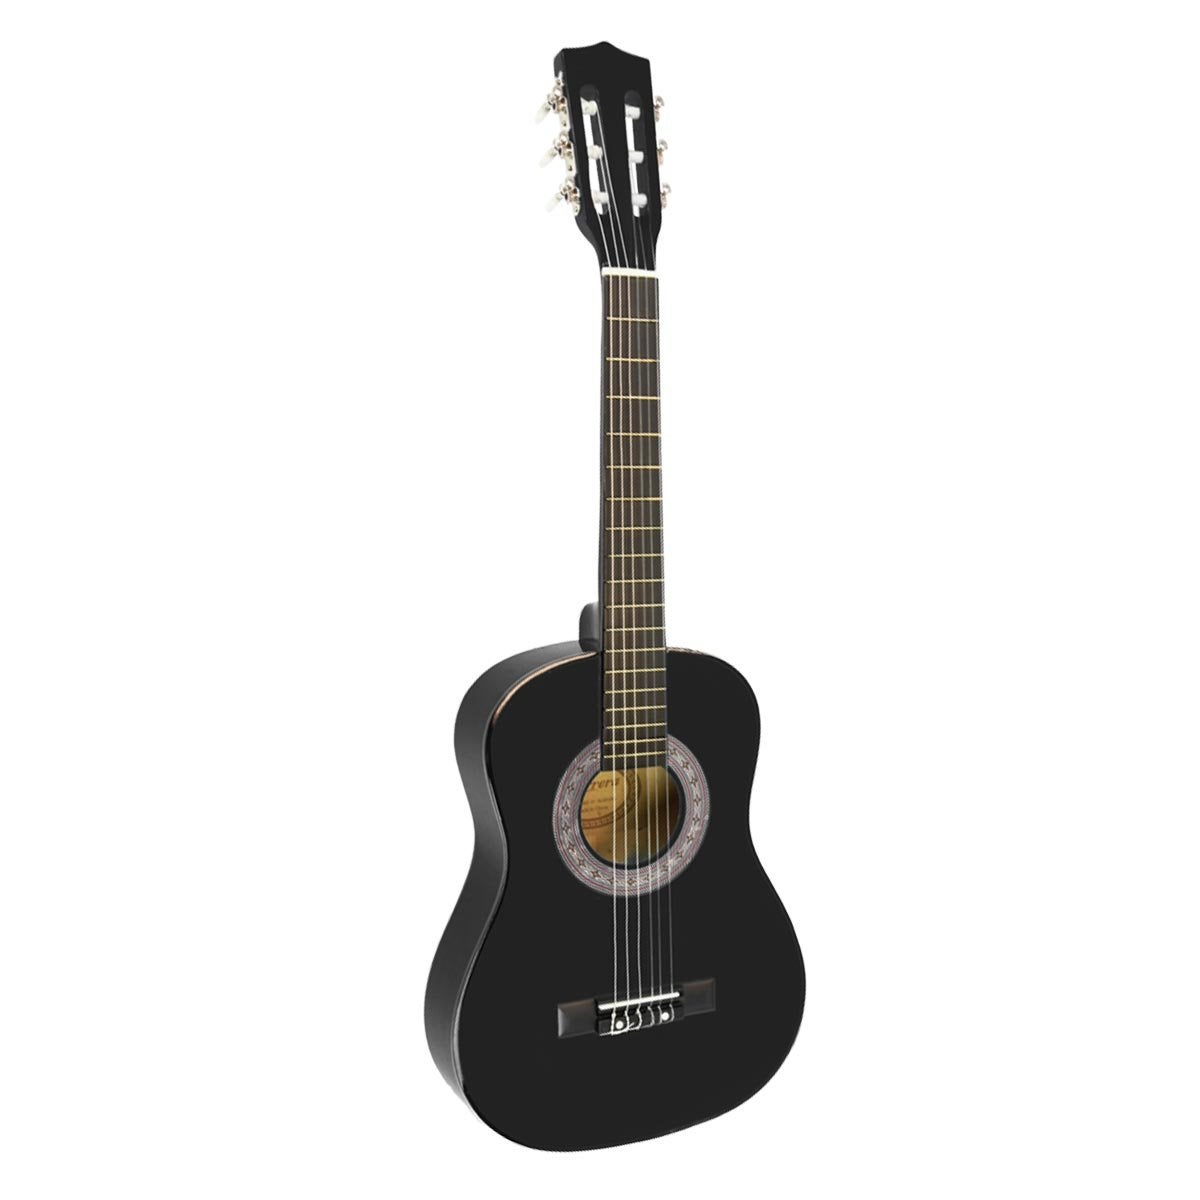 Karrera Childrens Acoustic Guitar Ideal Kids Gift Picks Strap Bag - Black